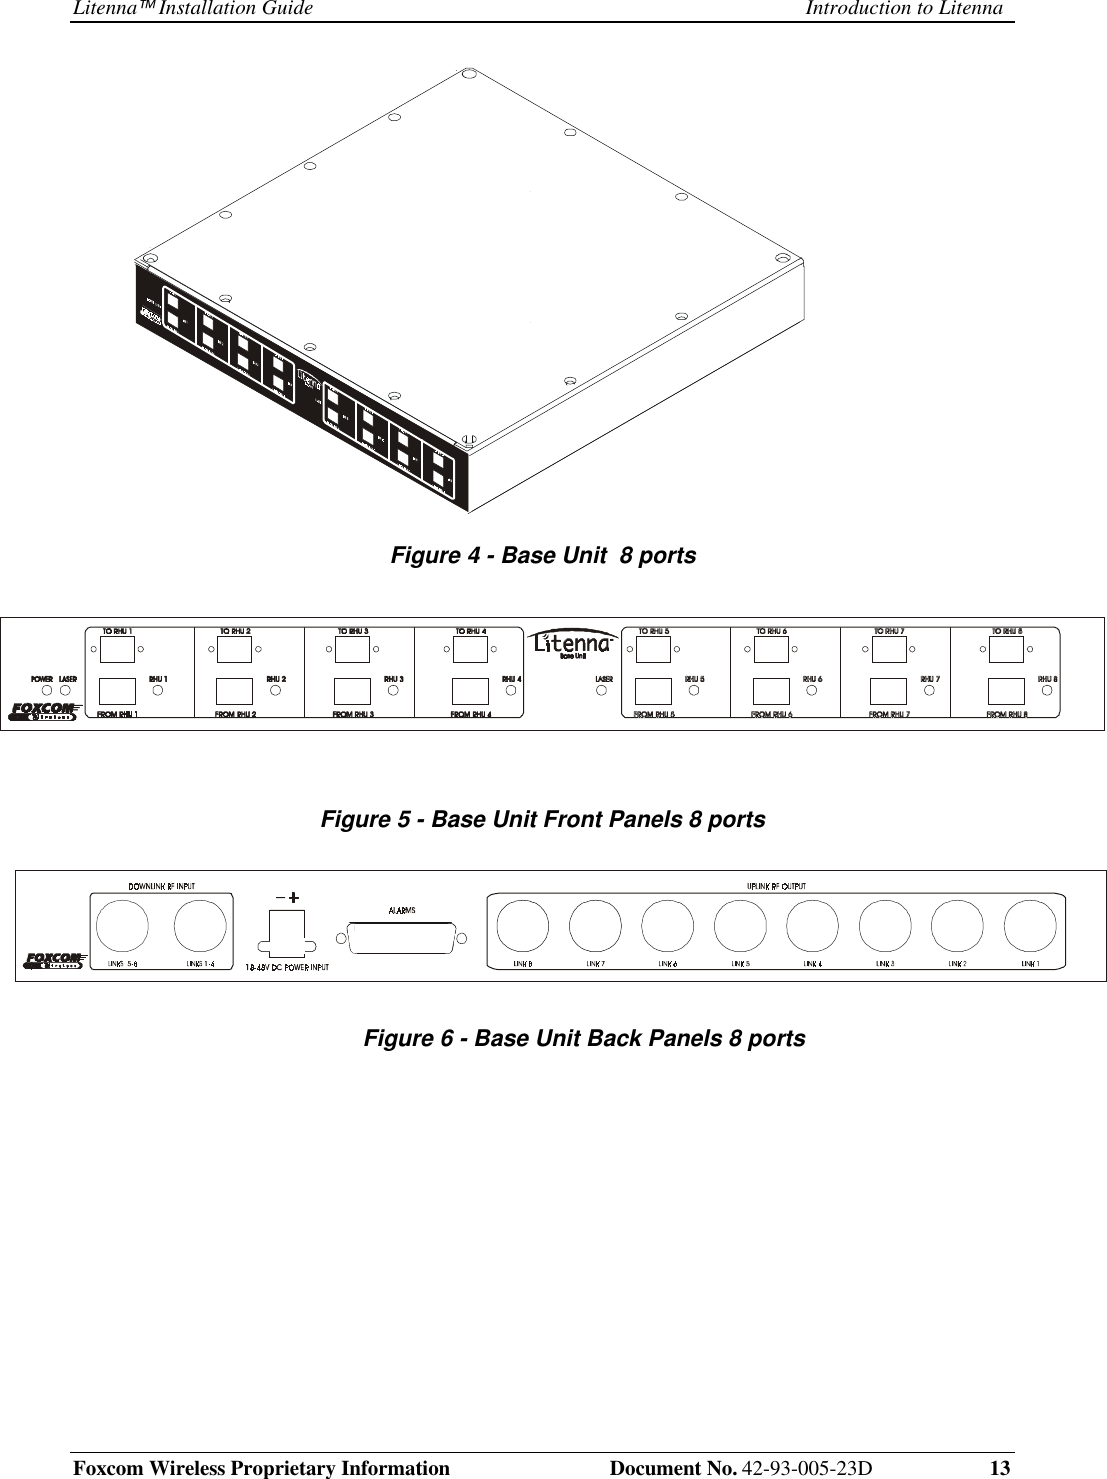 Litenna Installation Guide Introduction to LitennaFoxcom Wireless Proprietary Information  Document No. 42-93-005-23D 13Figure 4 - Base Unit  8 portsFigure 5 - Base Unit Front Panels 8 portsFigure 6 - Base Unit Back Panels 8 ports